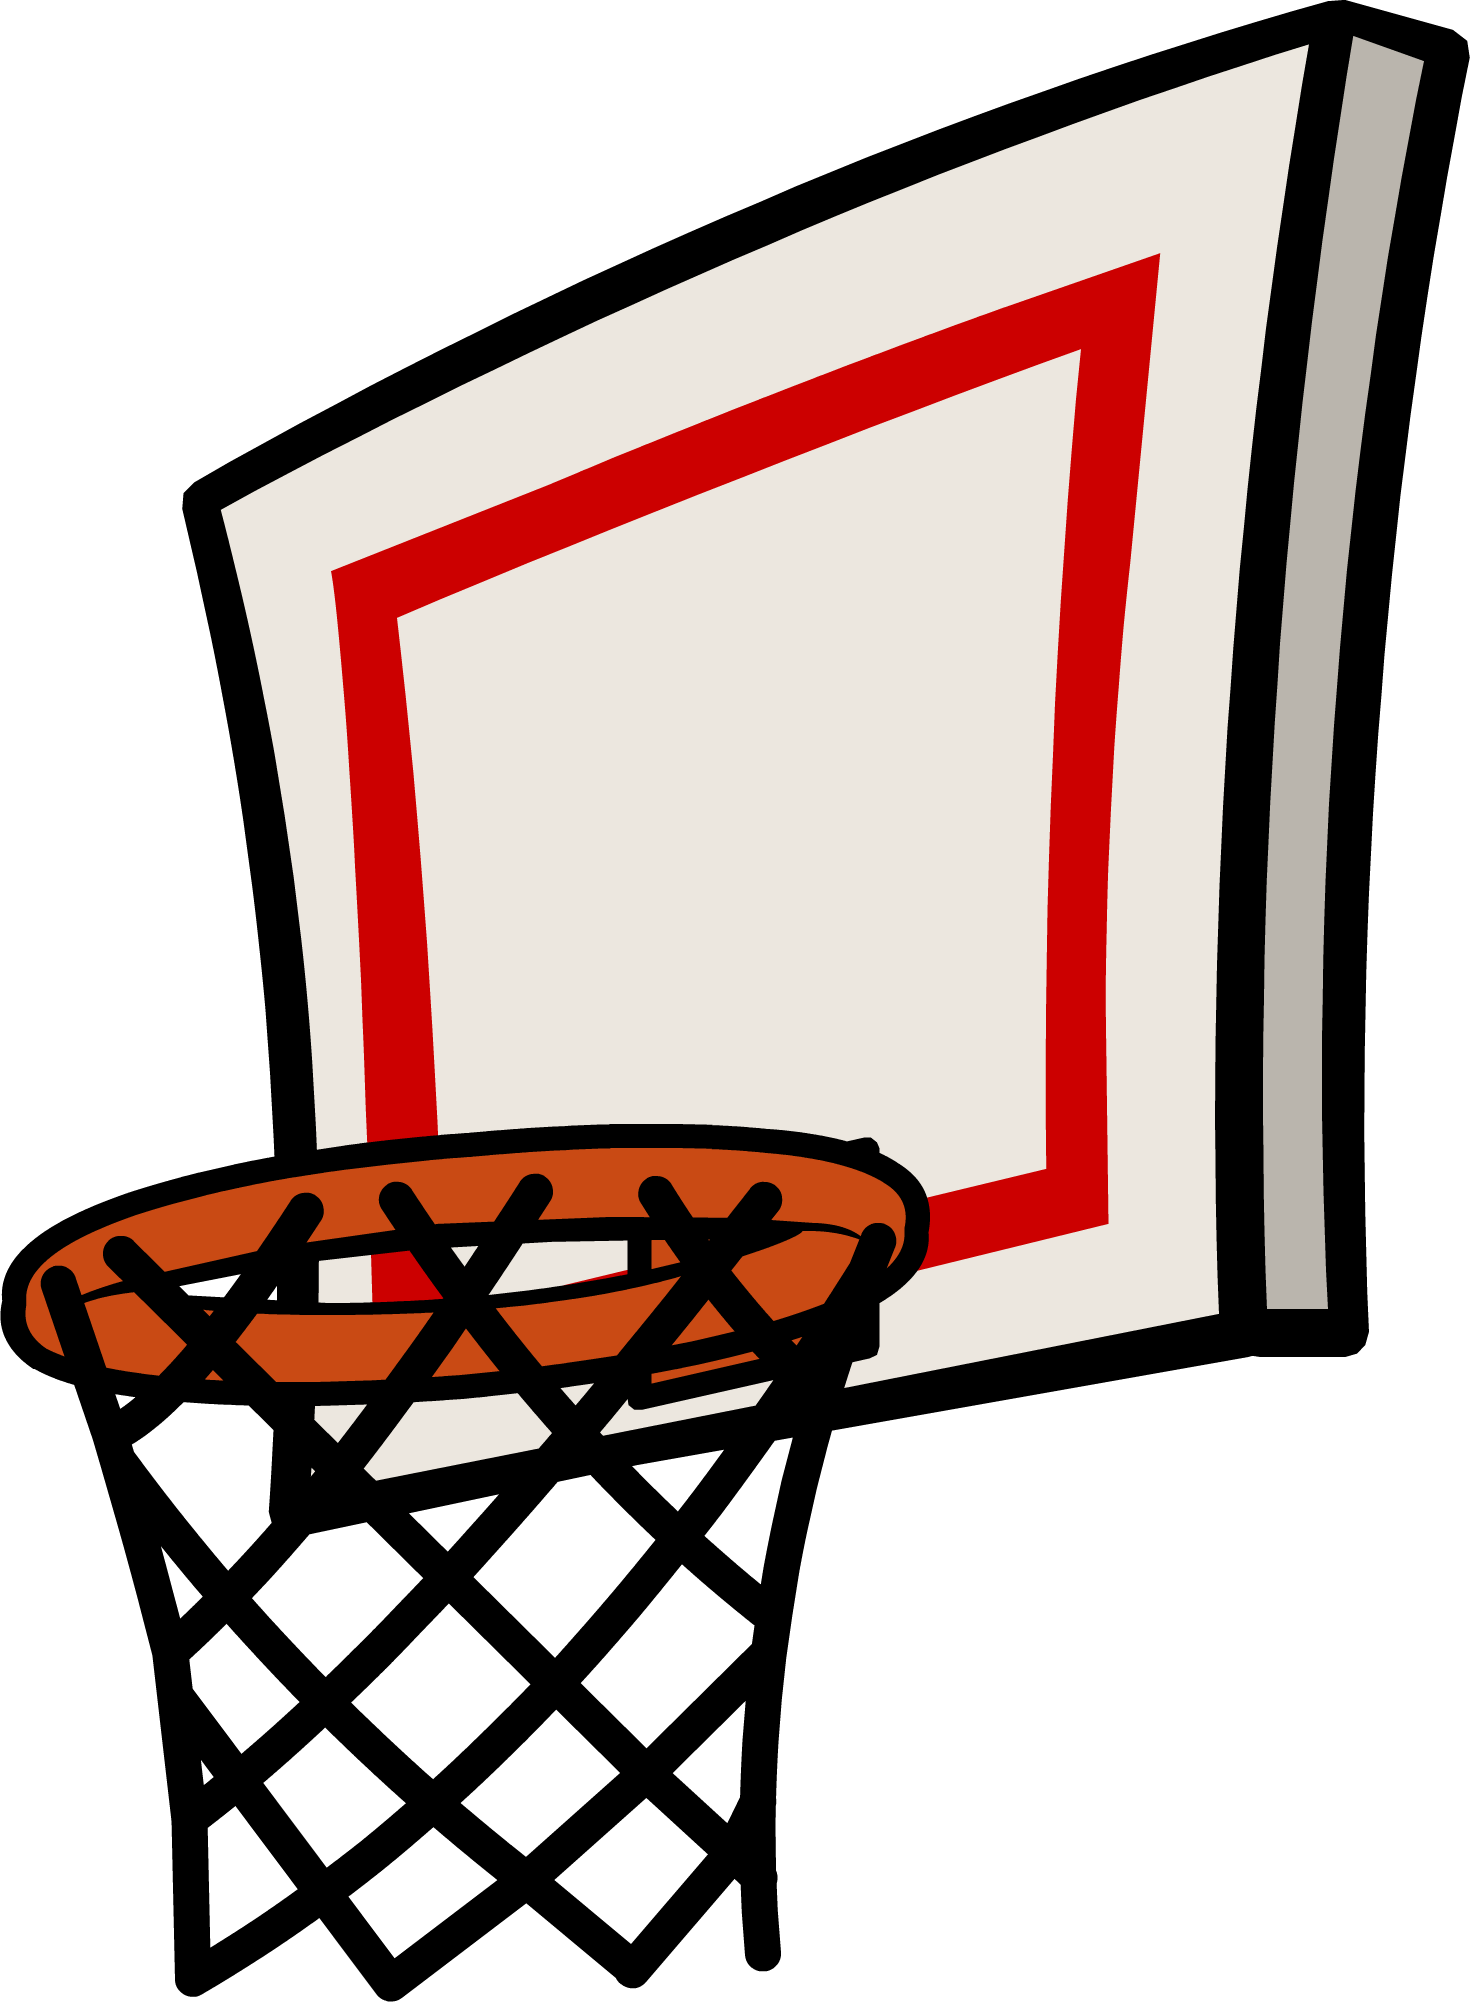 Bague de basket PNG Image